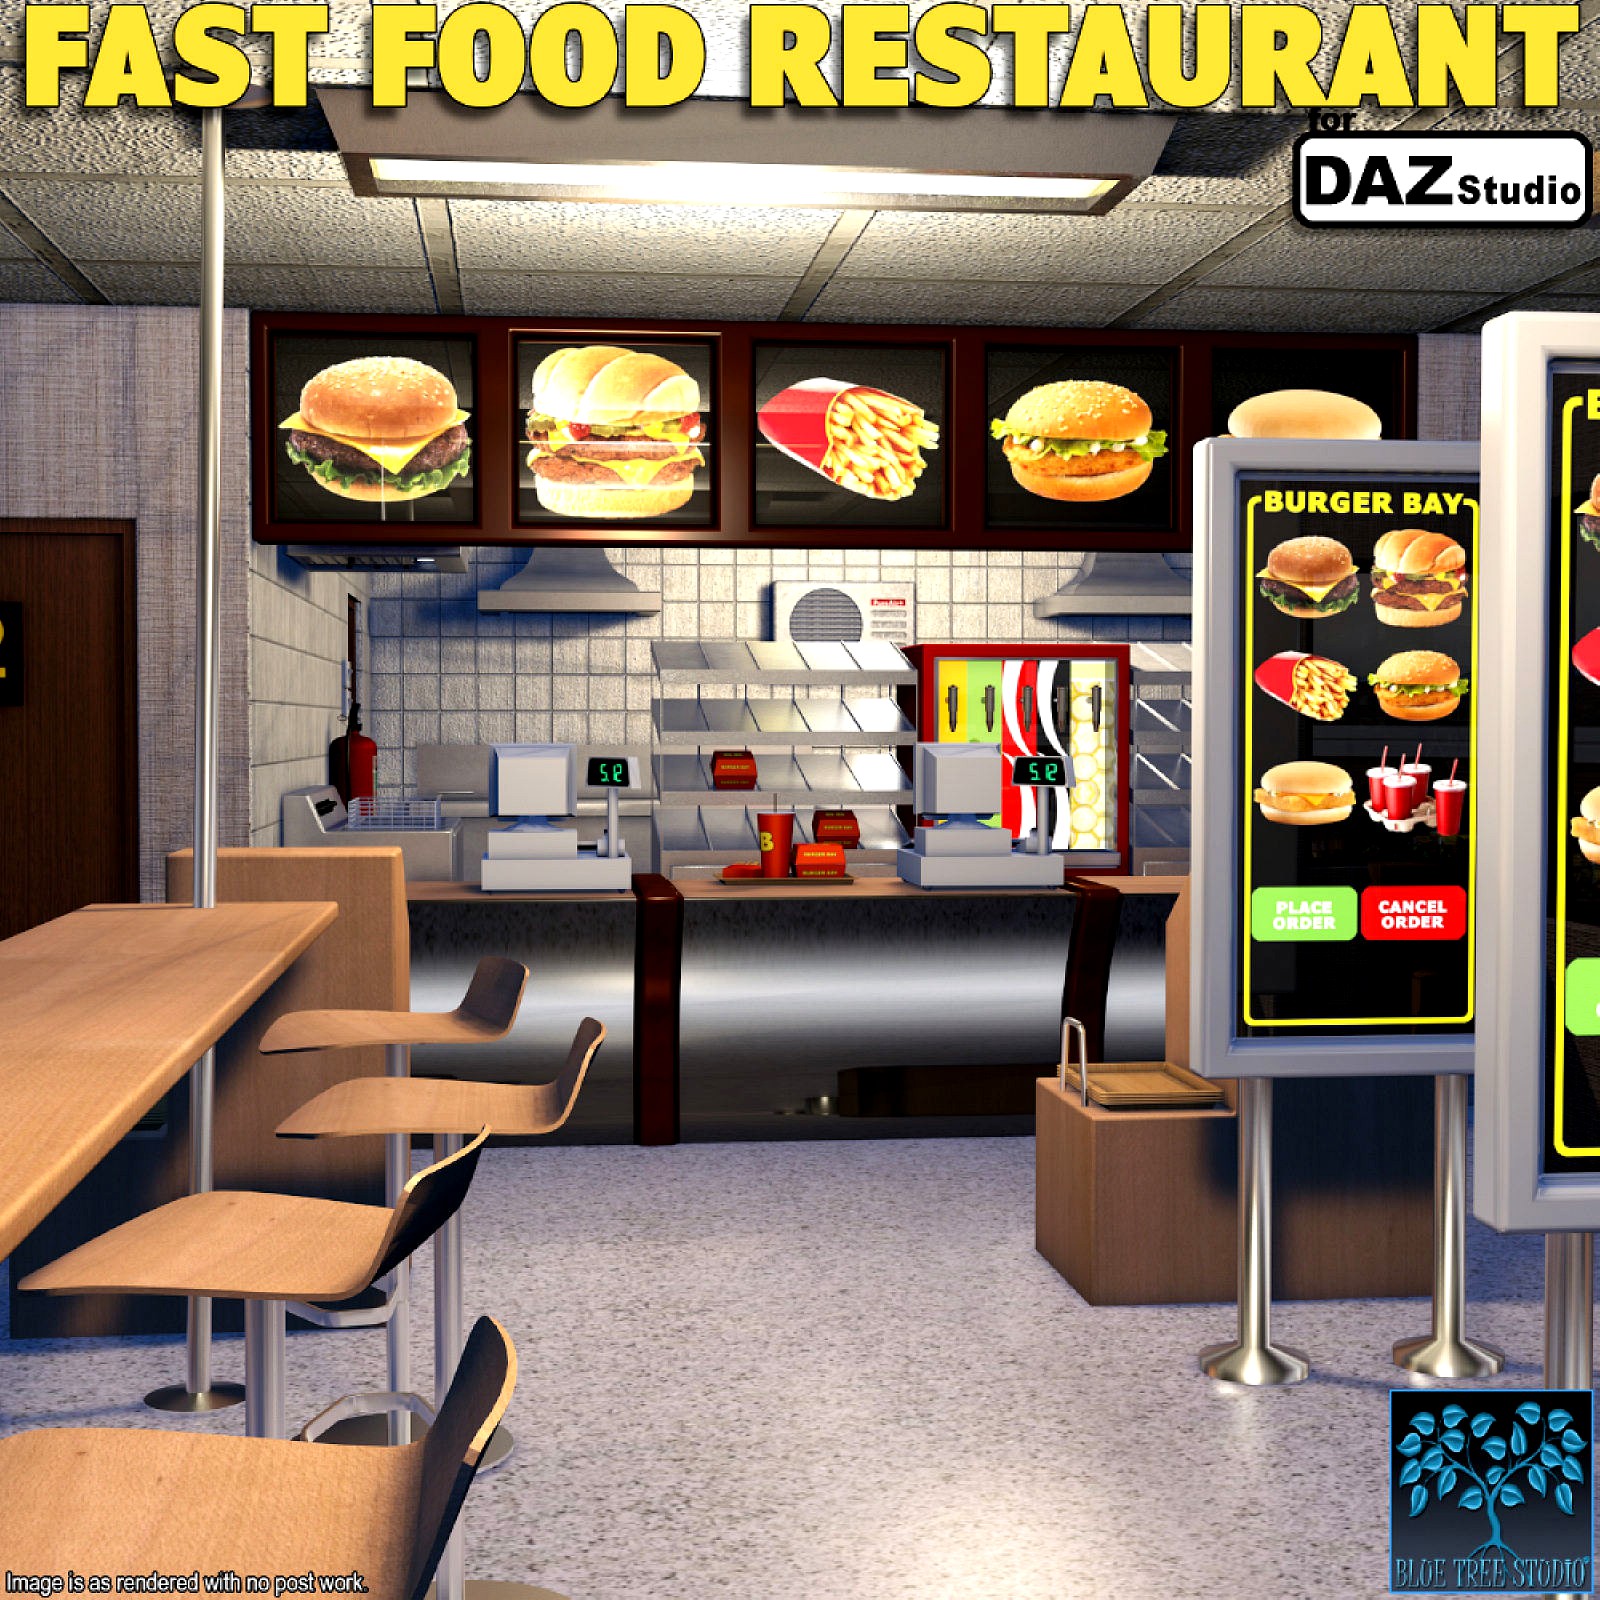 Fast Food Restaurant for Daz Studio